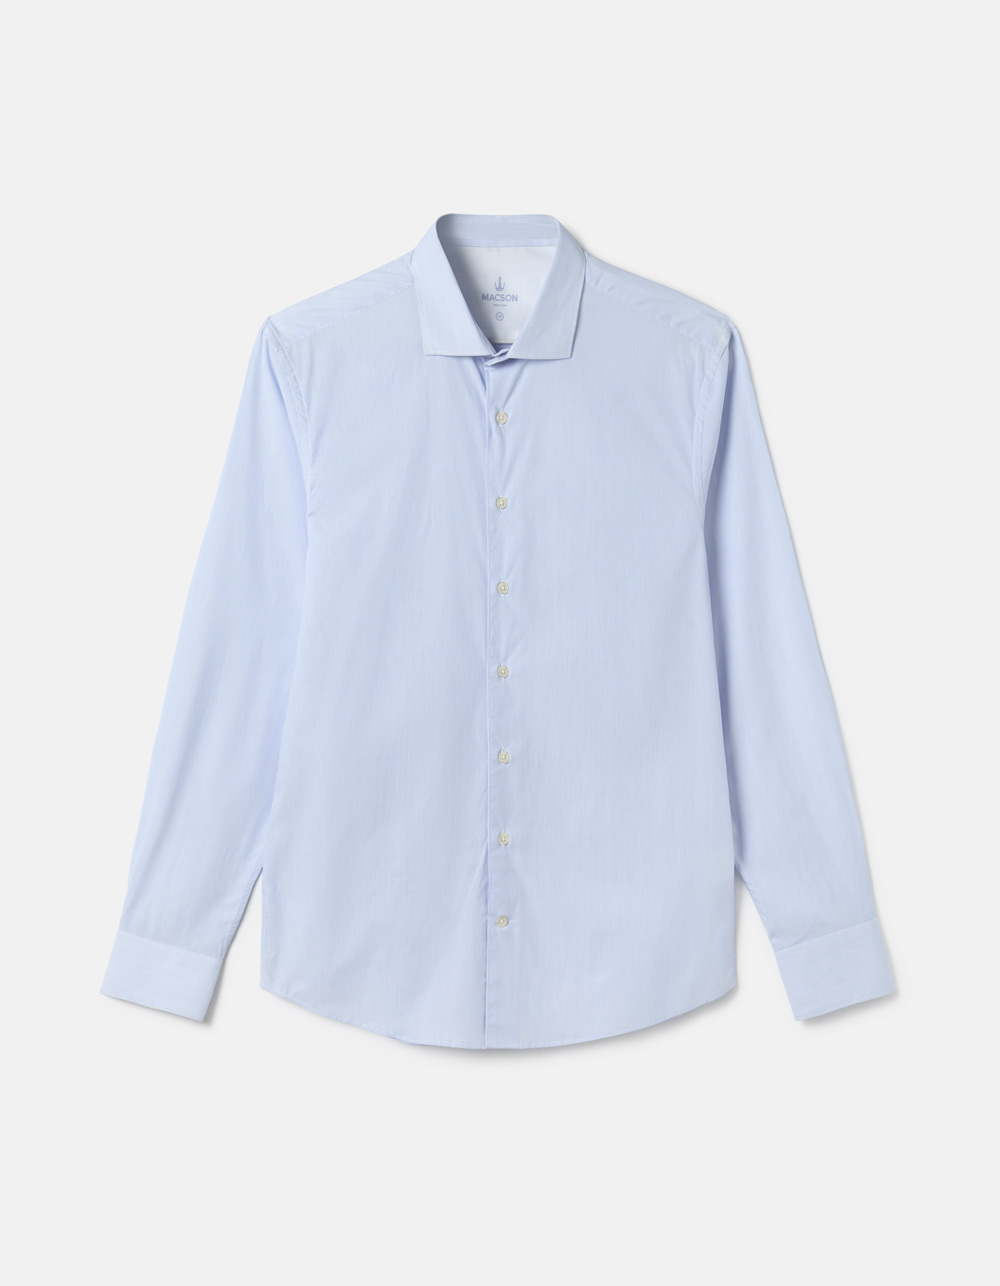 Camisa blanca amb ratlles blaves